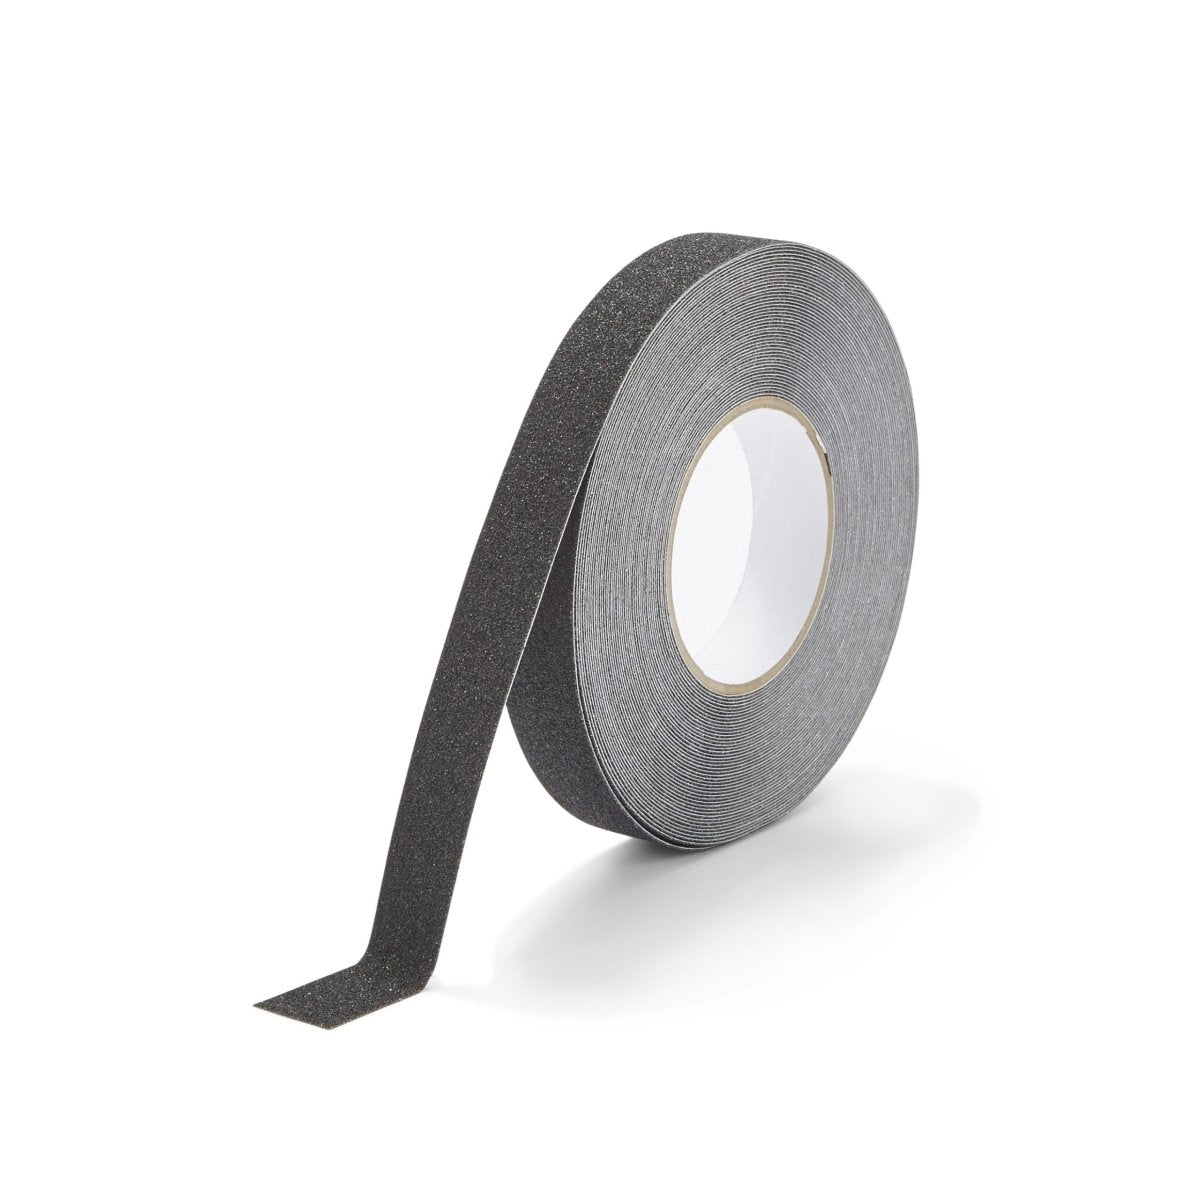 Course Grade Anti Slip Tape Rolls 18m - Slips Away - H3402N Safety-Grip Coarse - Black-25mm-1-1-1 -